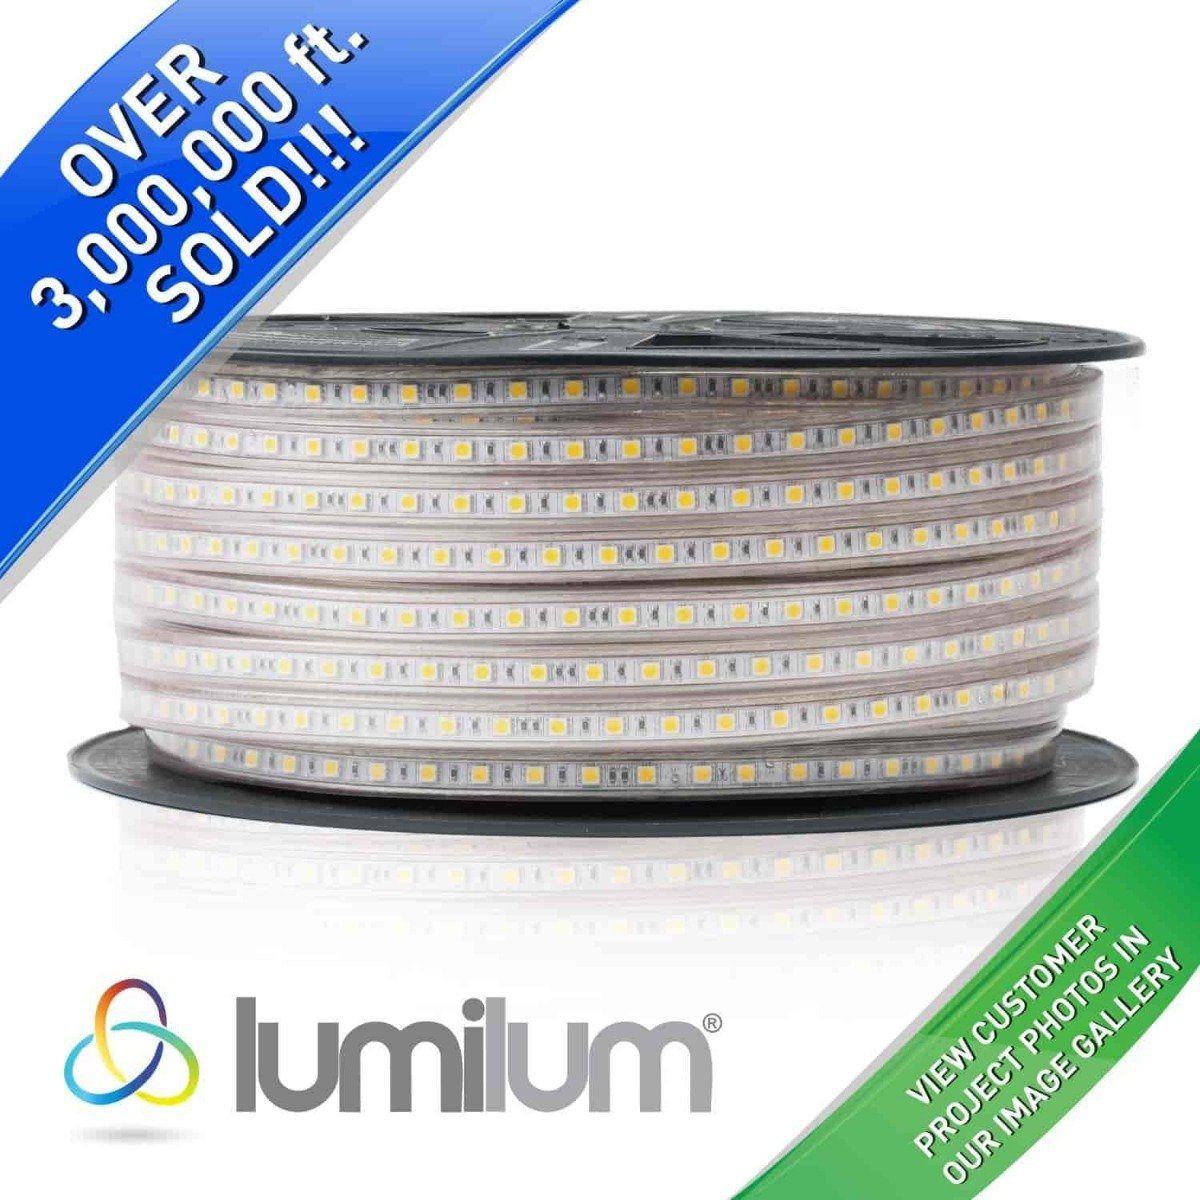 Custom Flexible LED Strip - Ultra Bright (White)